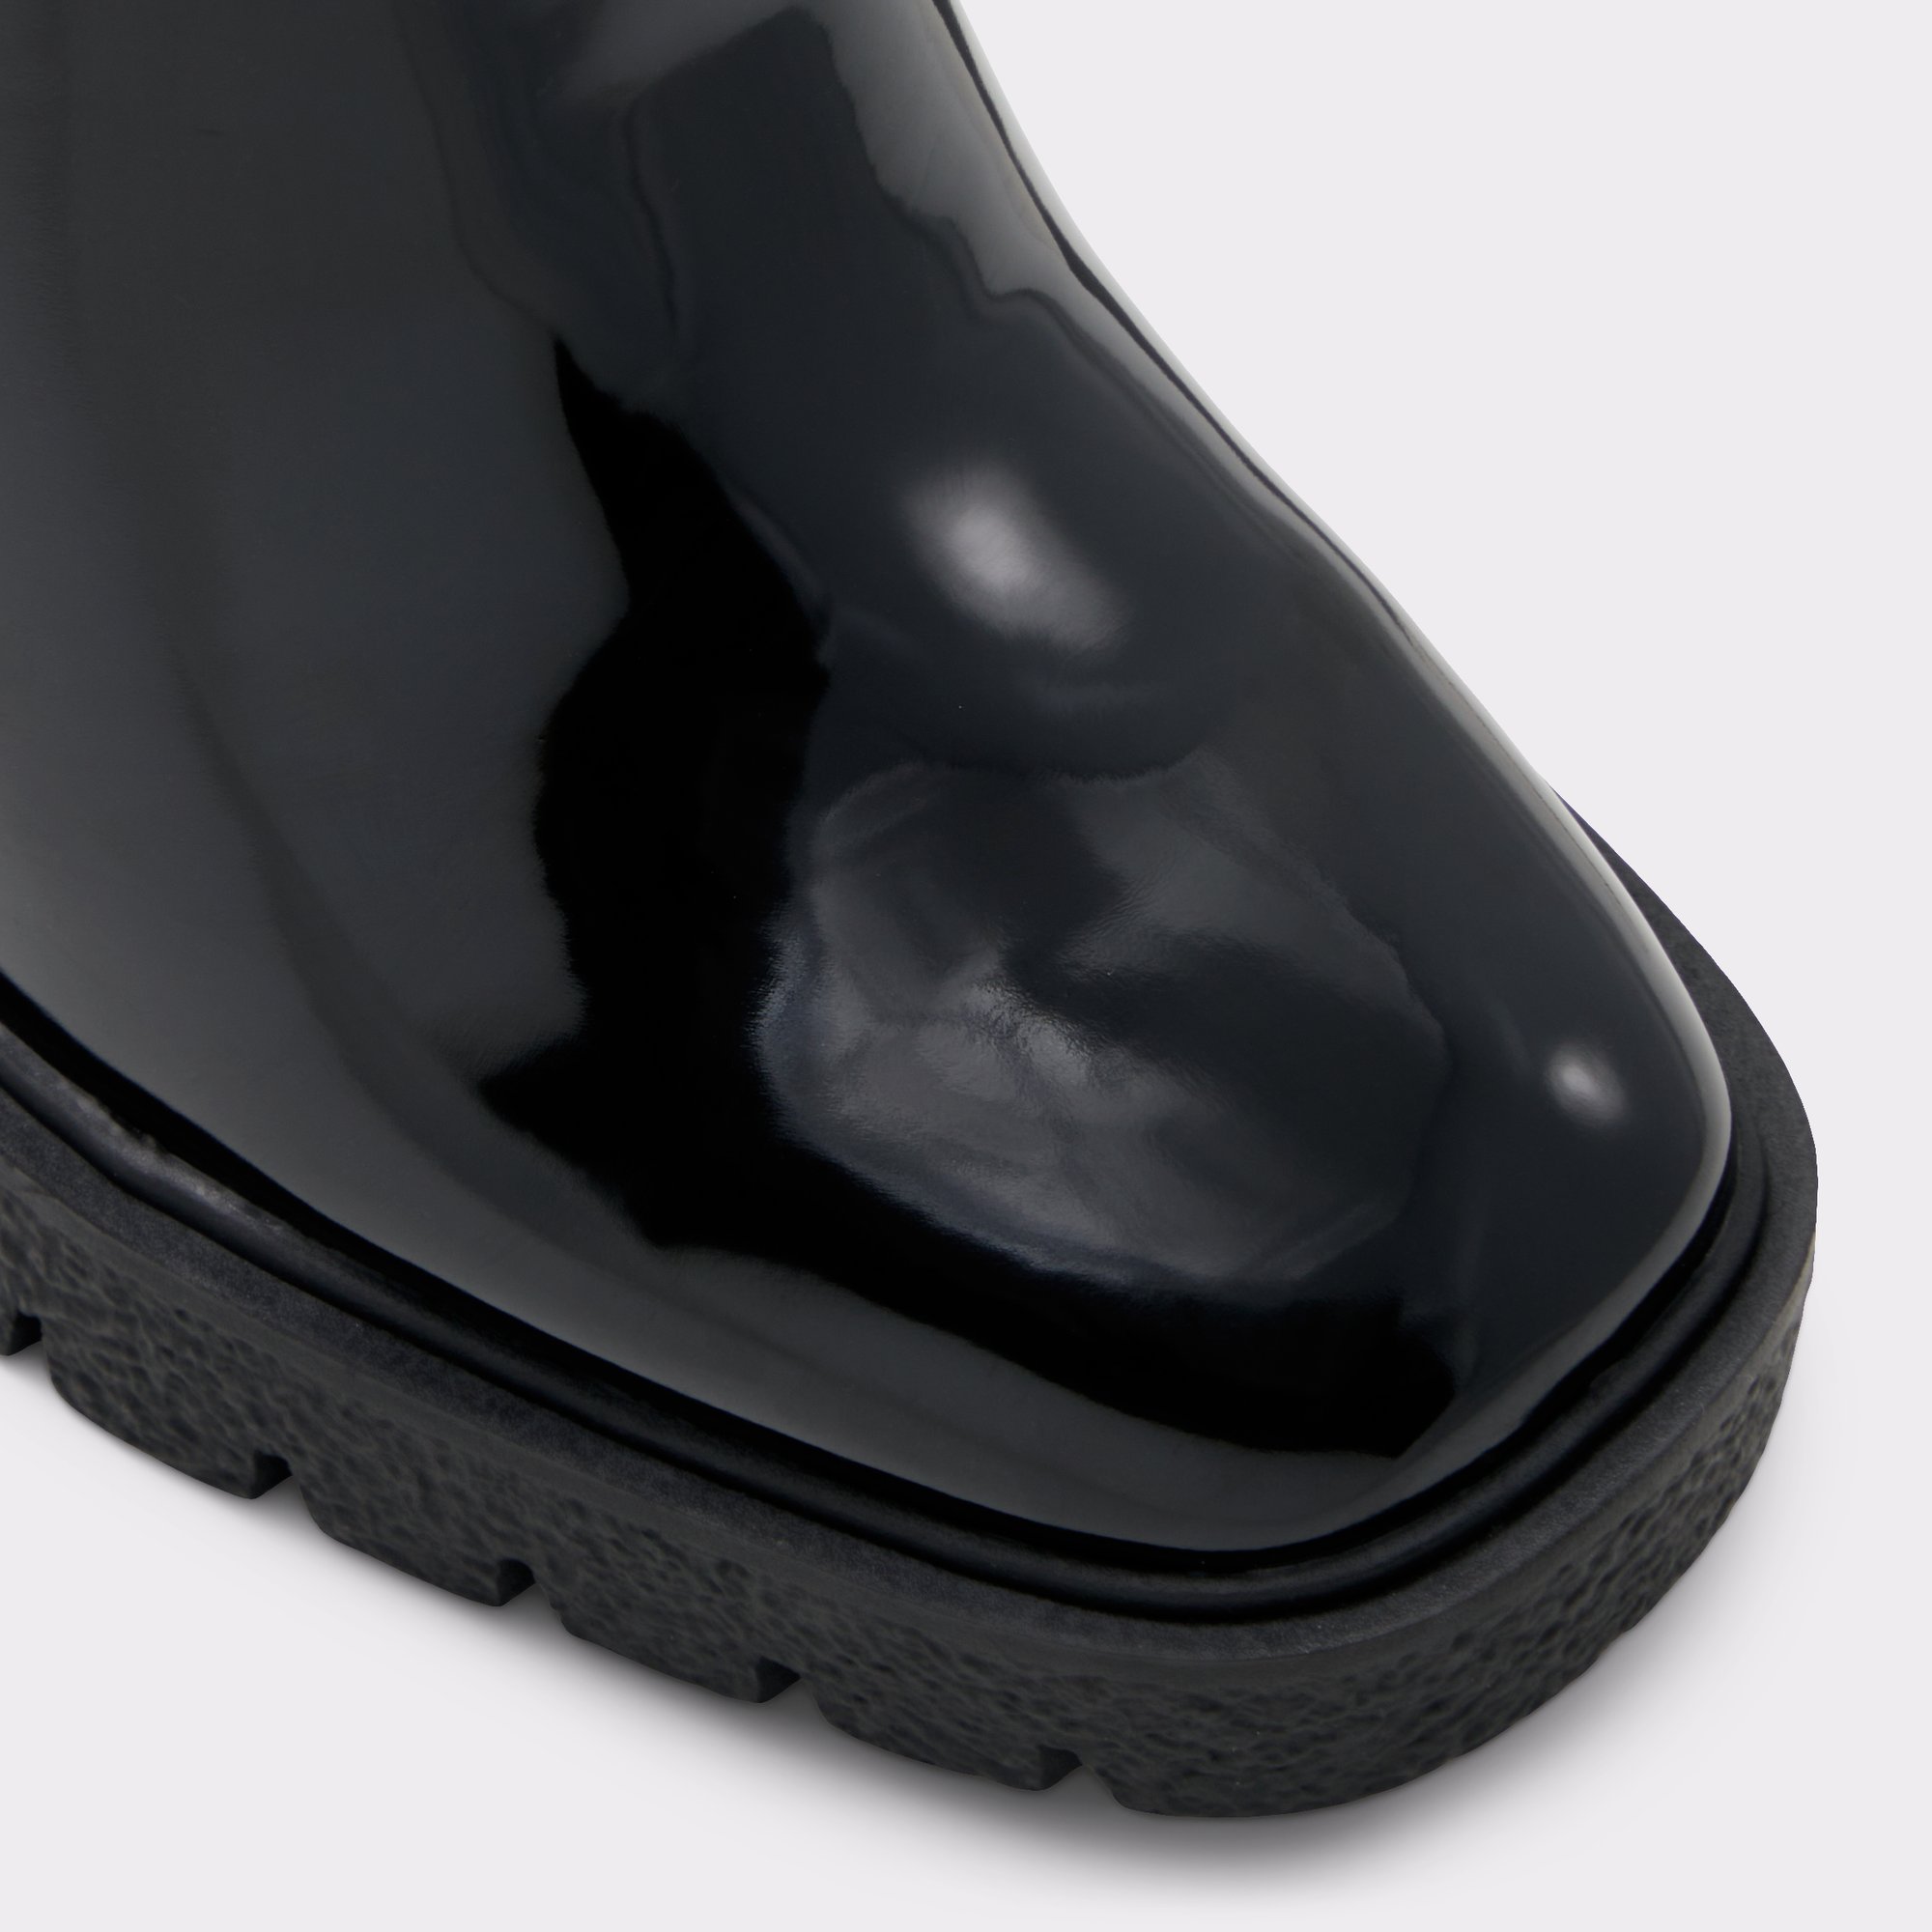 Larah Black Synthetic Patent Women's Ankle boots | ALDO Canada